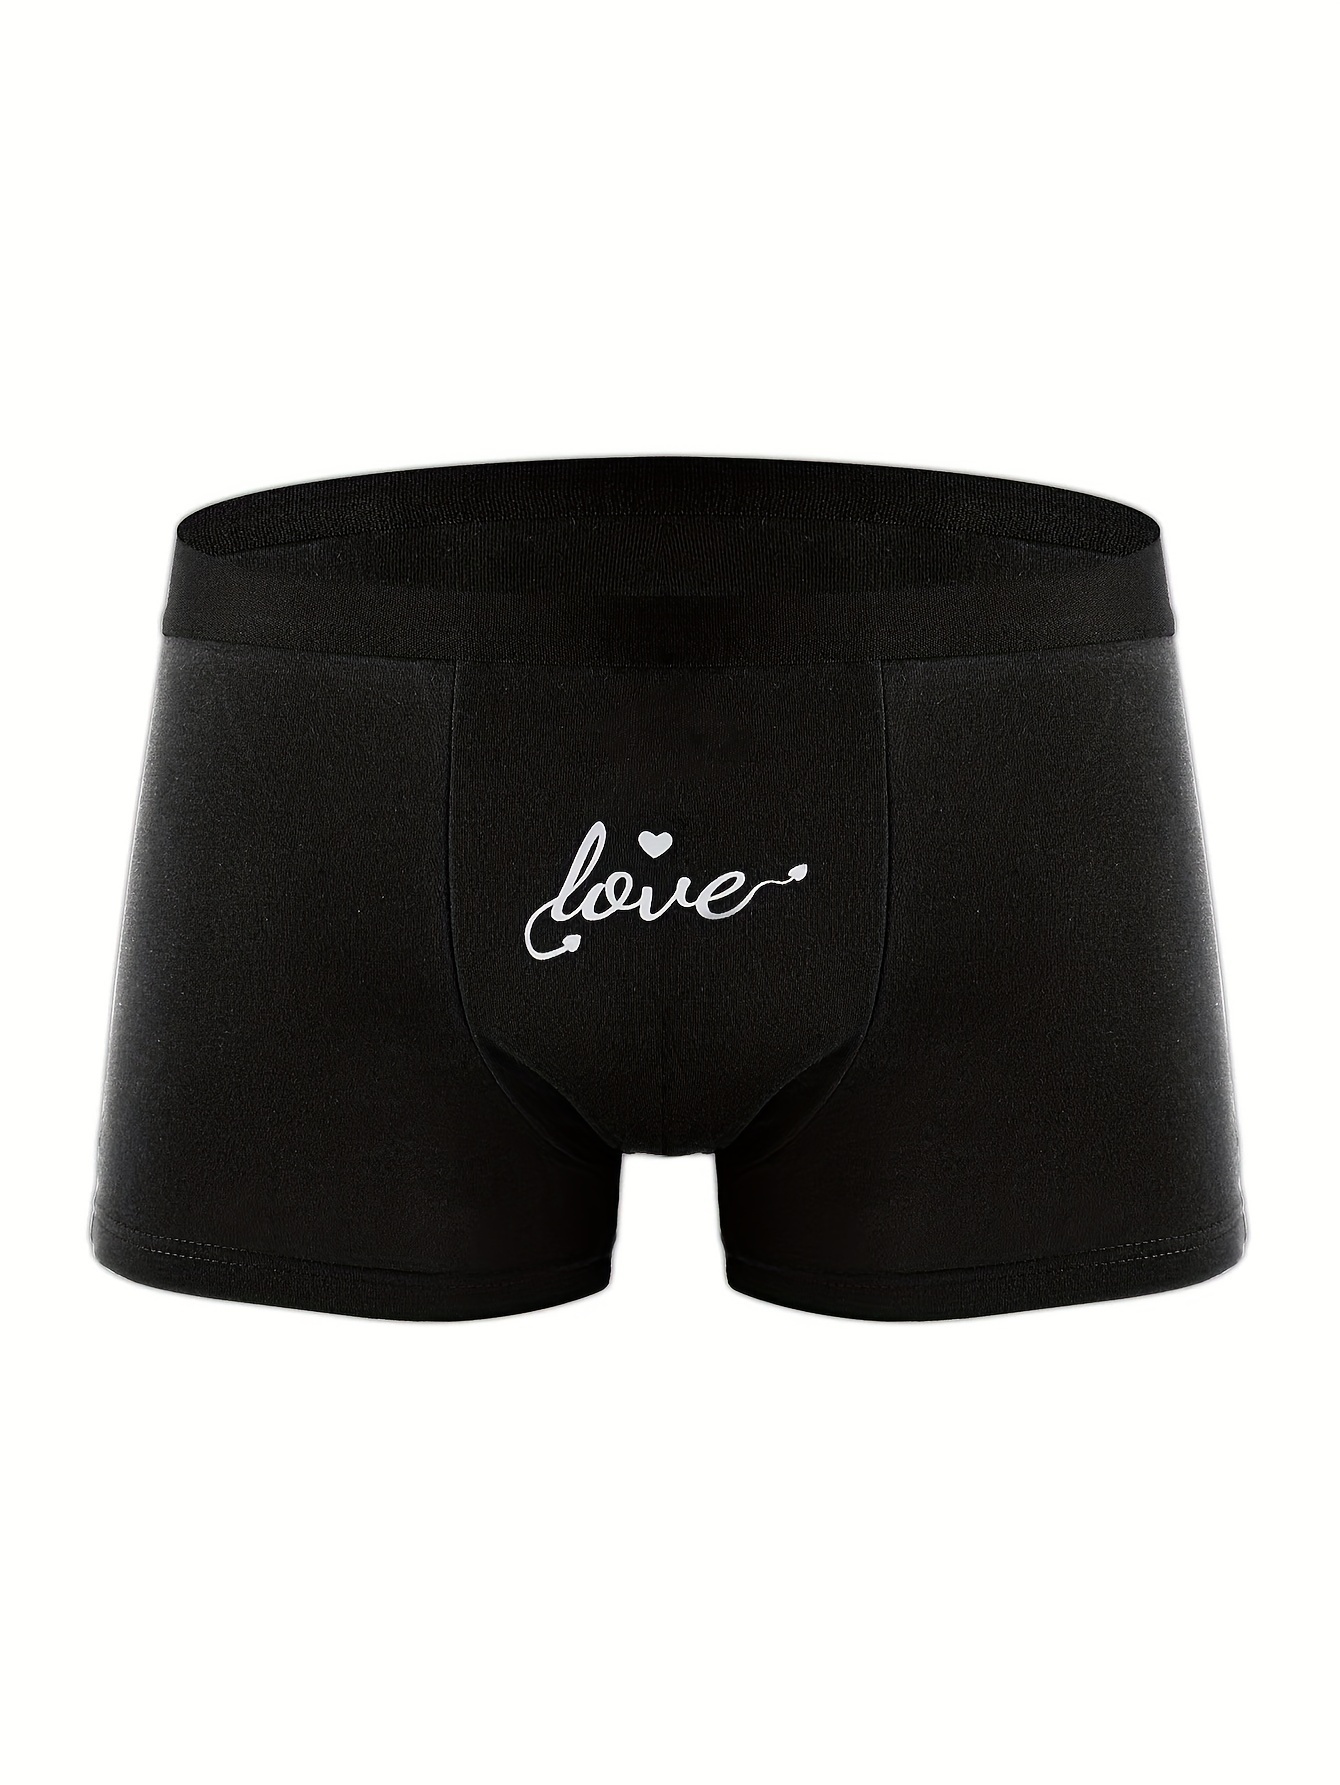 Mens Hearts all Over Boxer Briefs Underwear Novelty Fun Gift